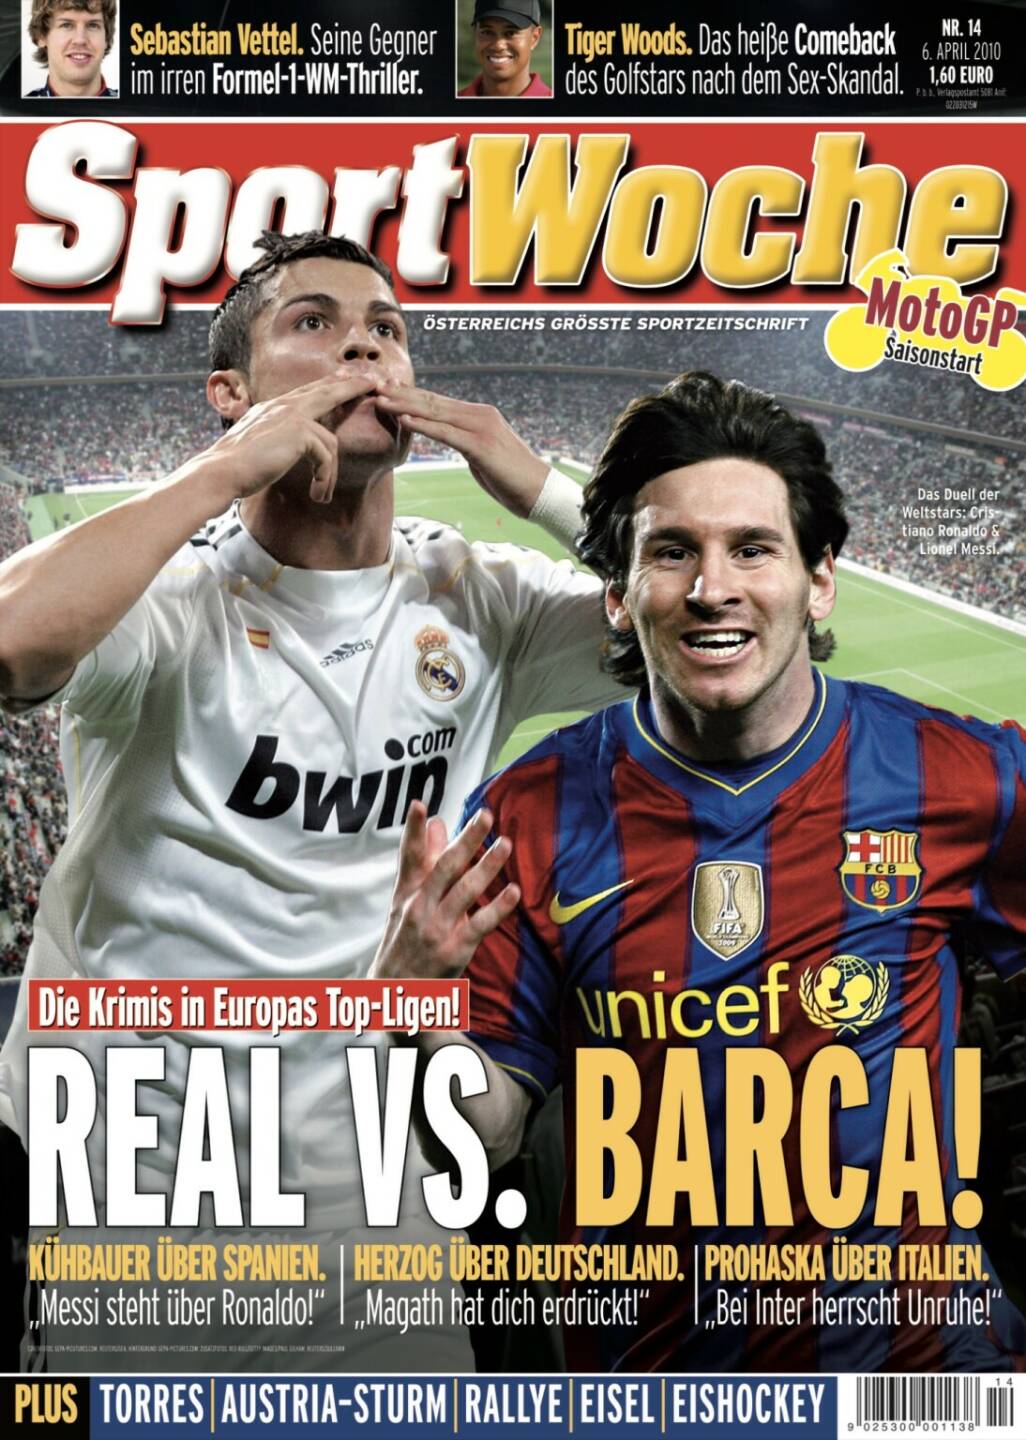 Sportwoche Nr 14, 6. April 2010: